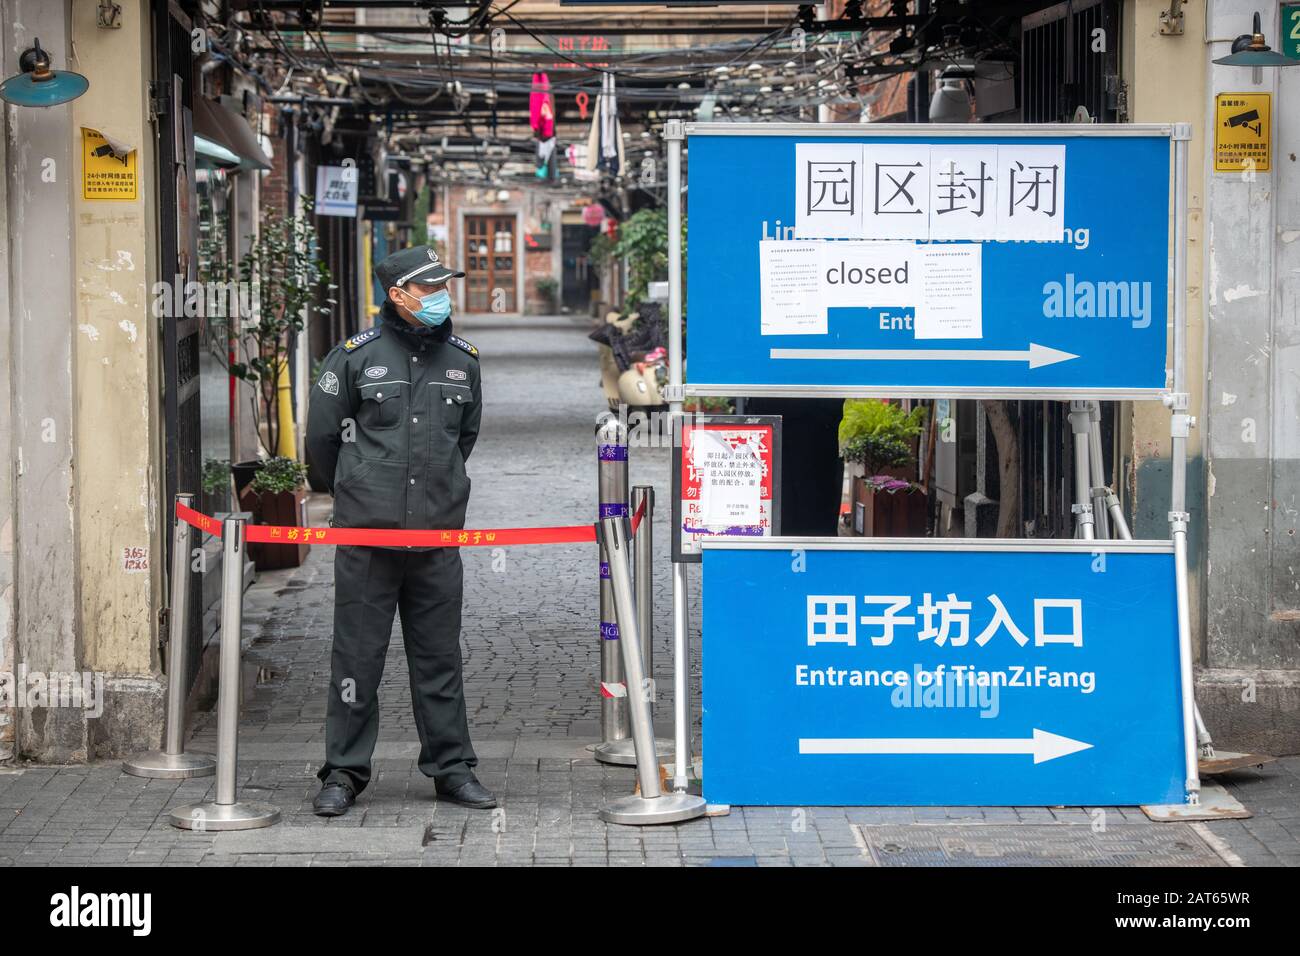 Shanghai, China, 28th Jan 2020, Shopping area closed in TianZiFang during the Coronavirus outbreak Stock Photo